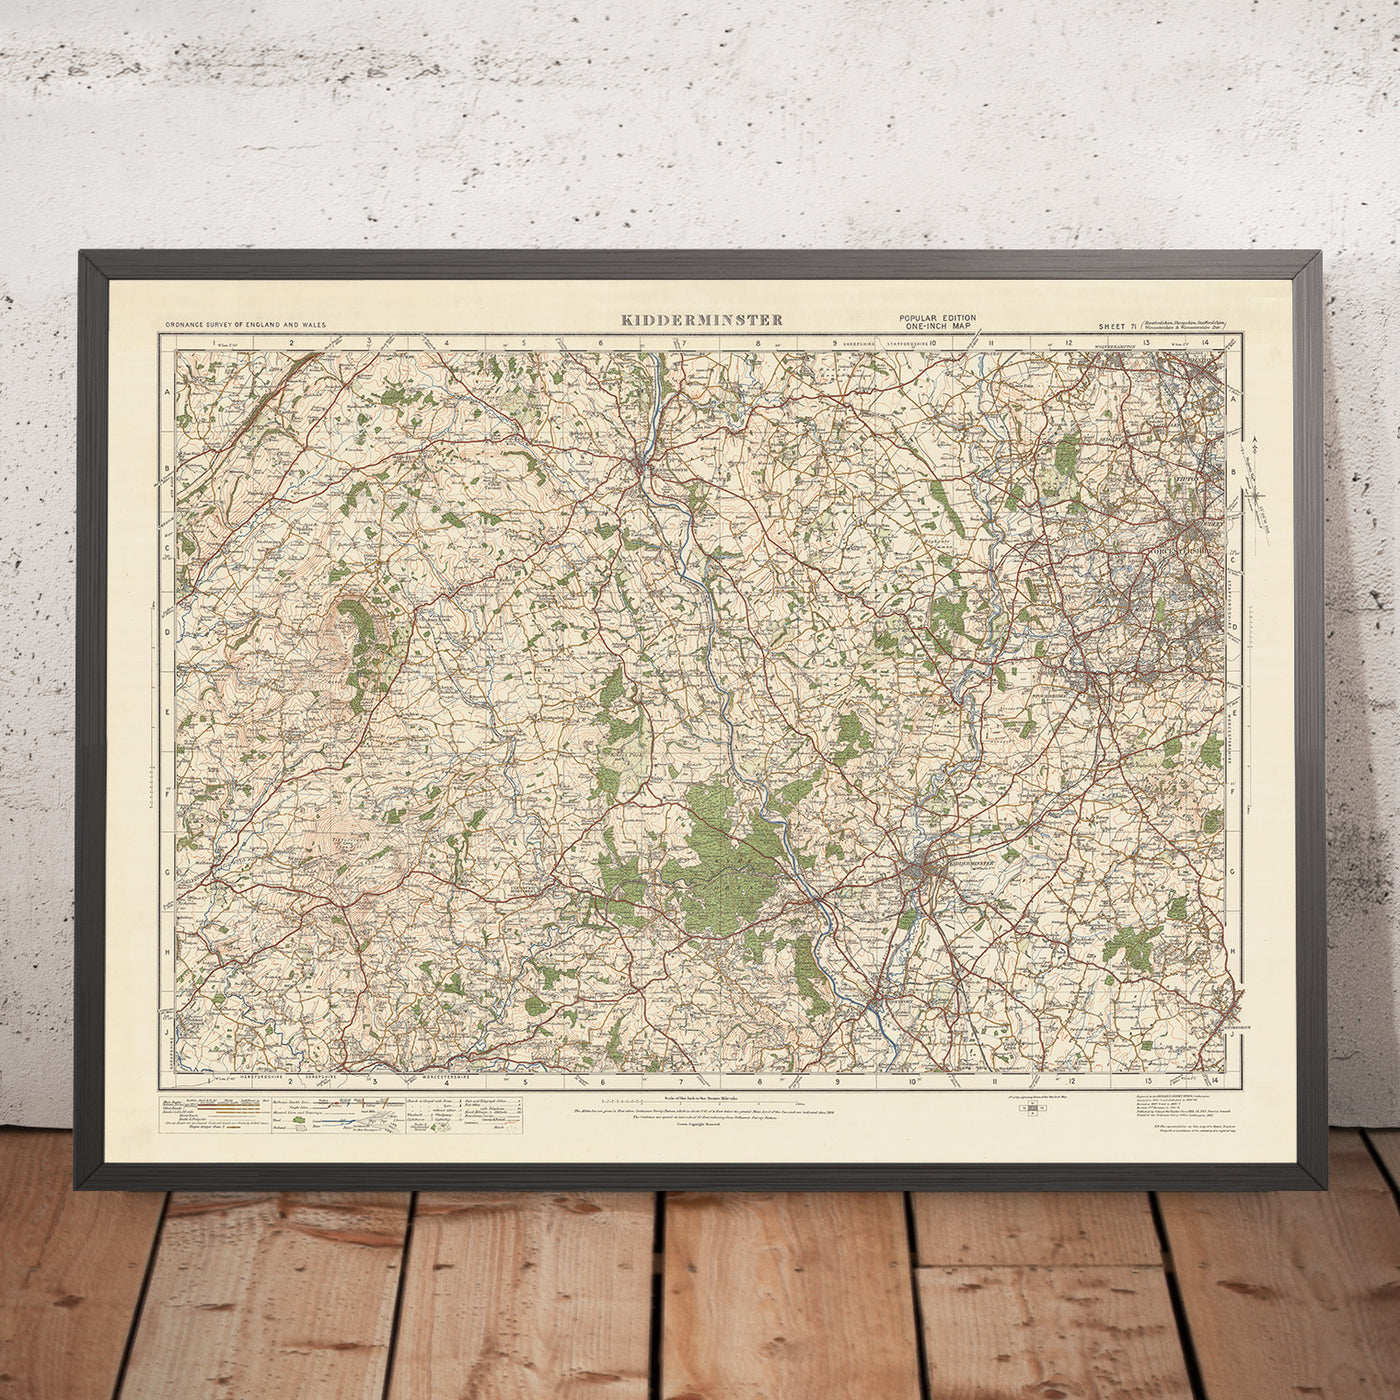 Old Ordnance Survey Map, Sheet 71 - Kidderminster, 1925: Dudley, Stourbridge, Stourport-on-Severn, Bridgnorth, Wyre Forest National Nature Reserve